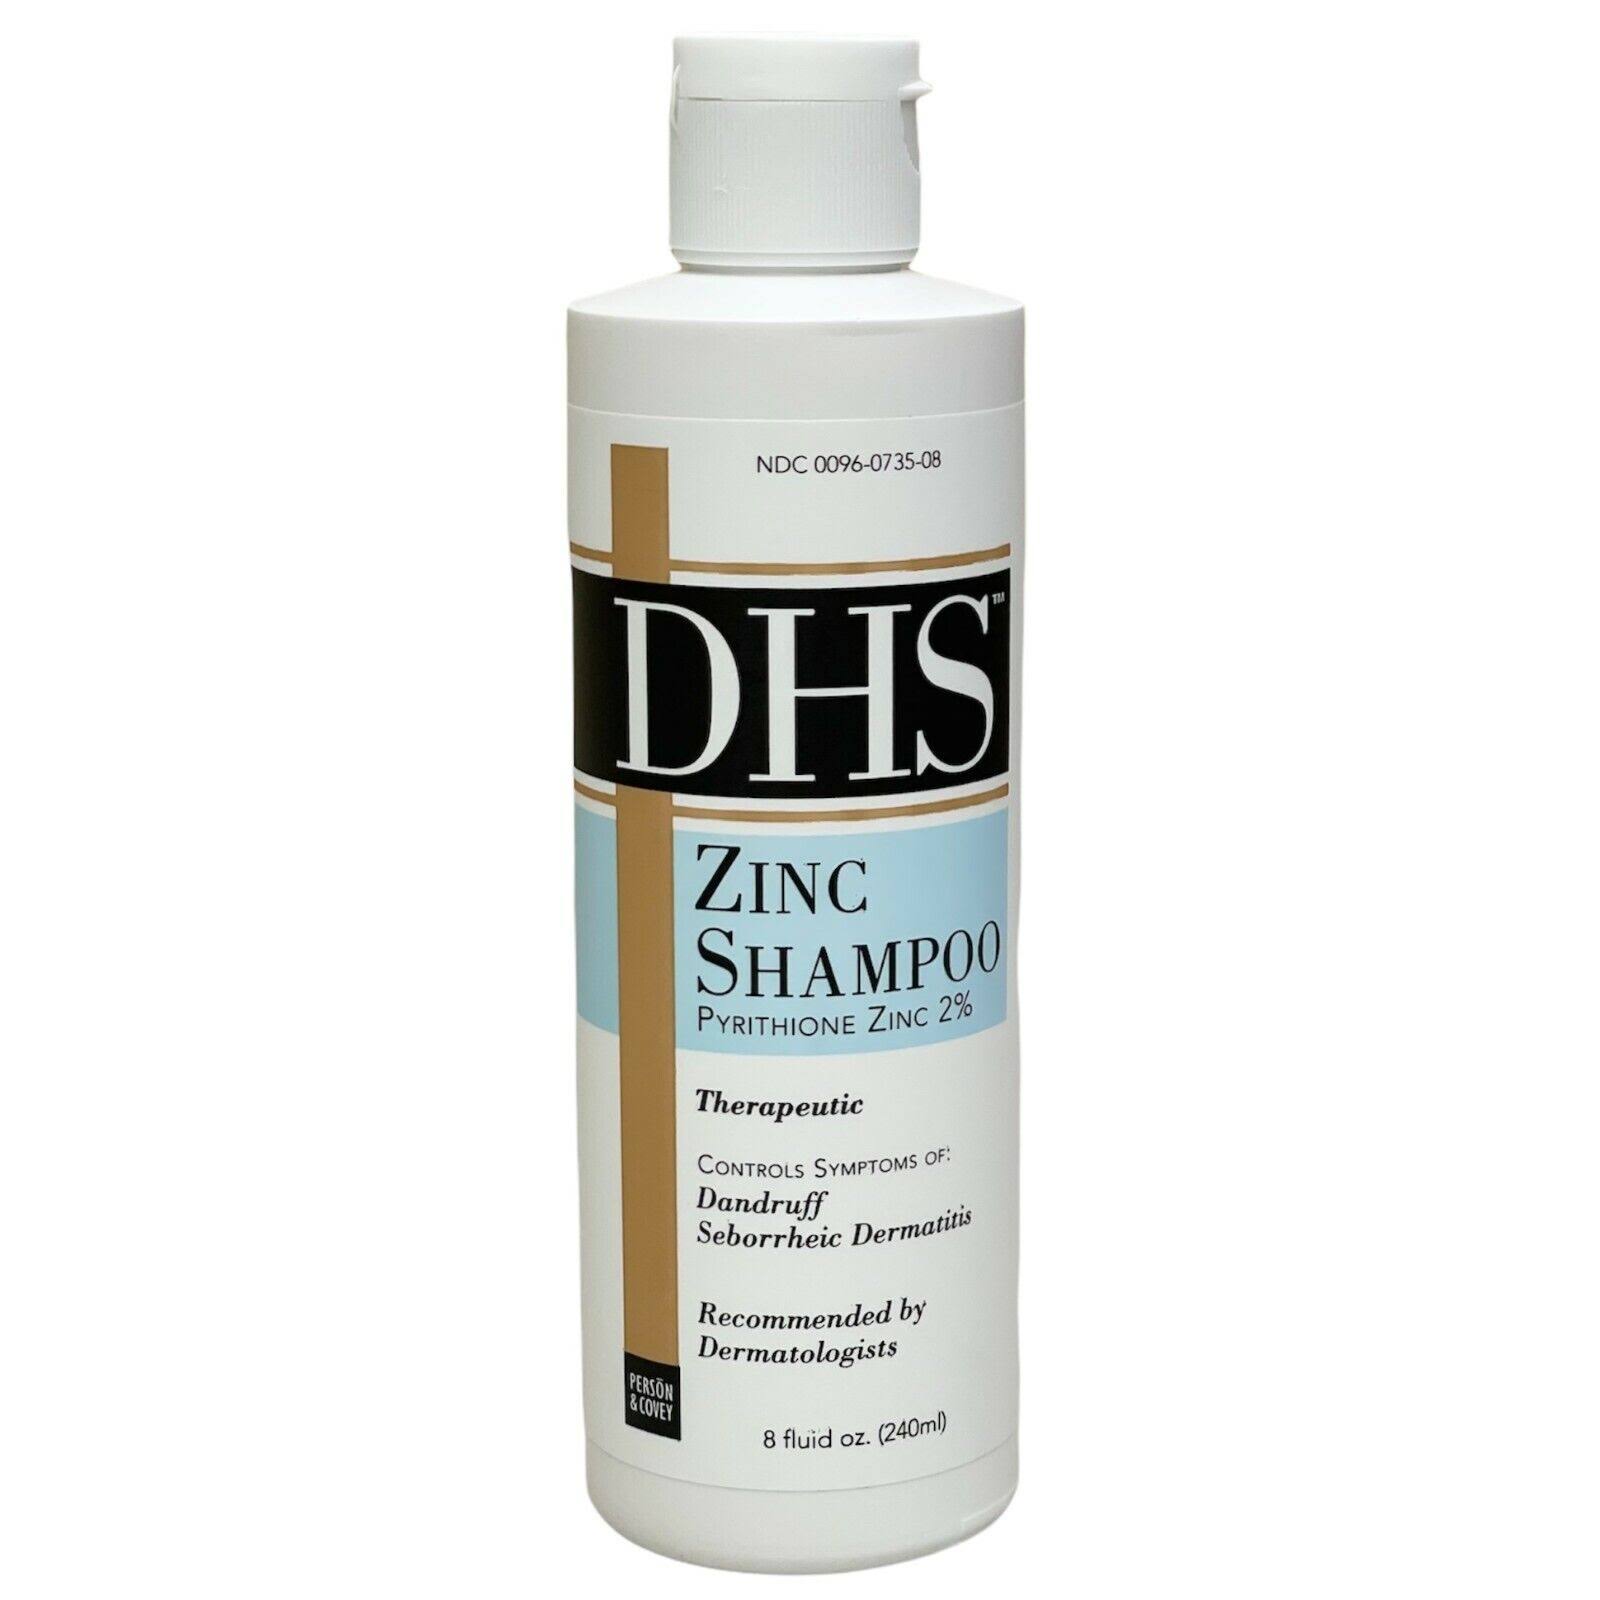 DHS Zinc Shampoo - 8oz